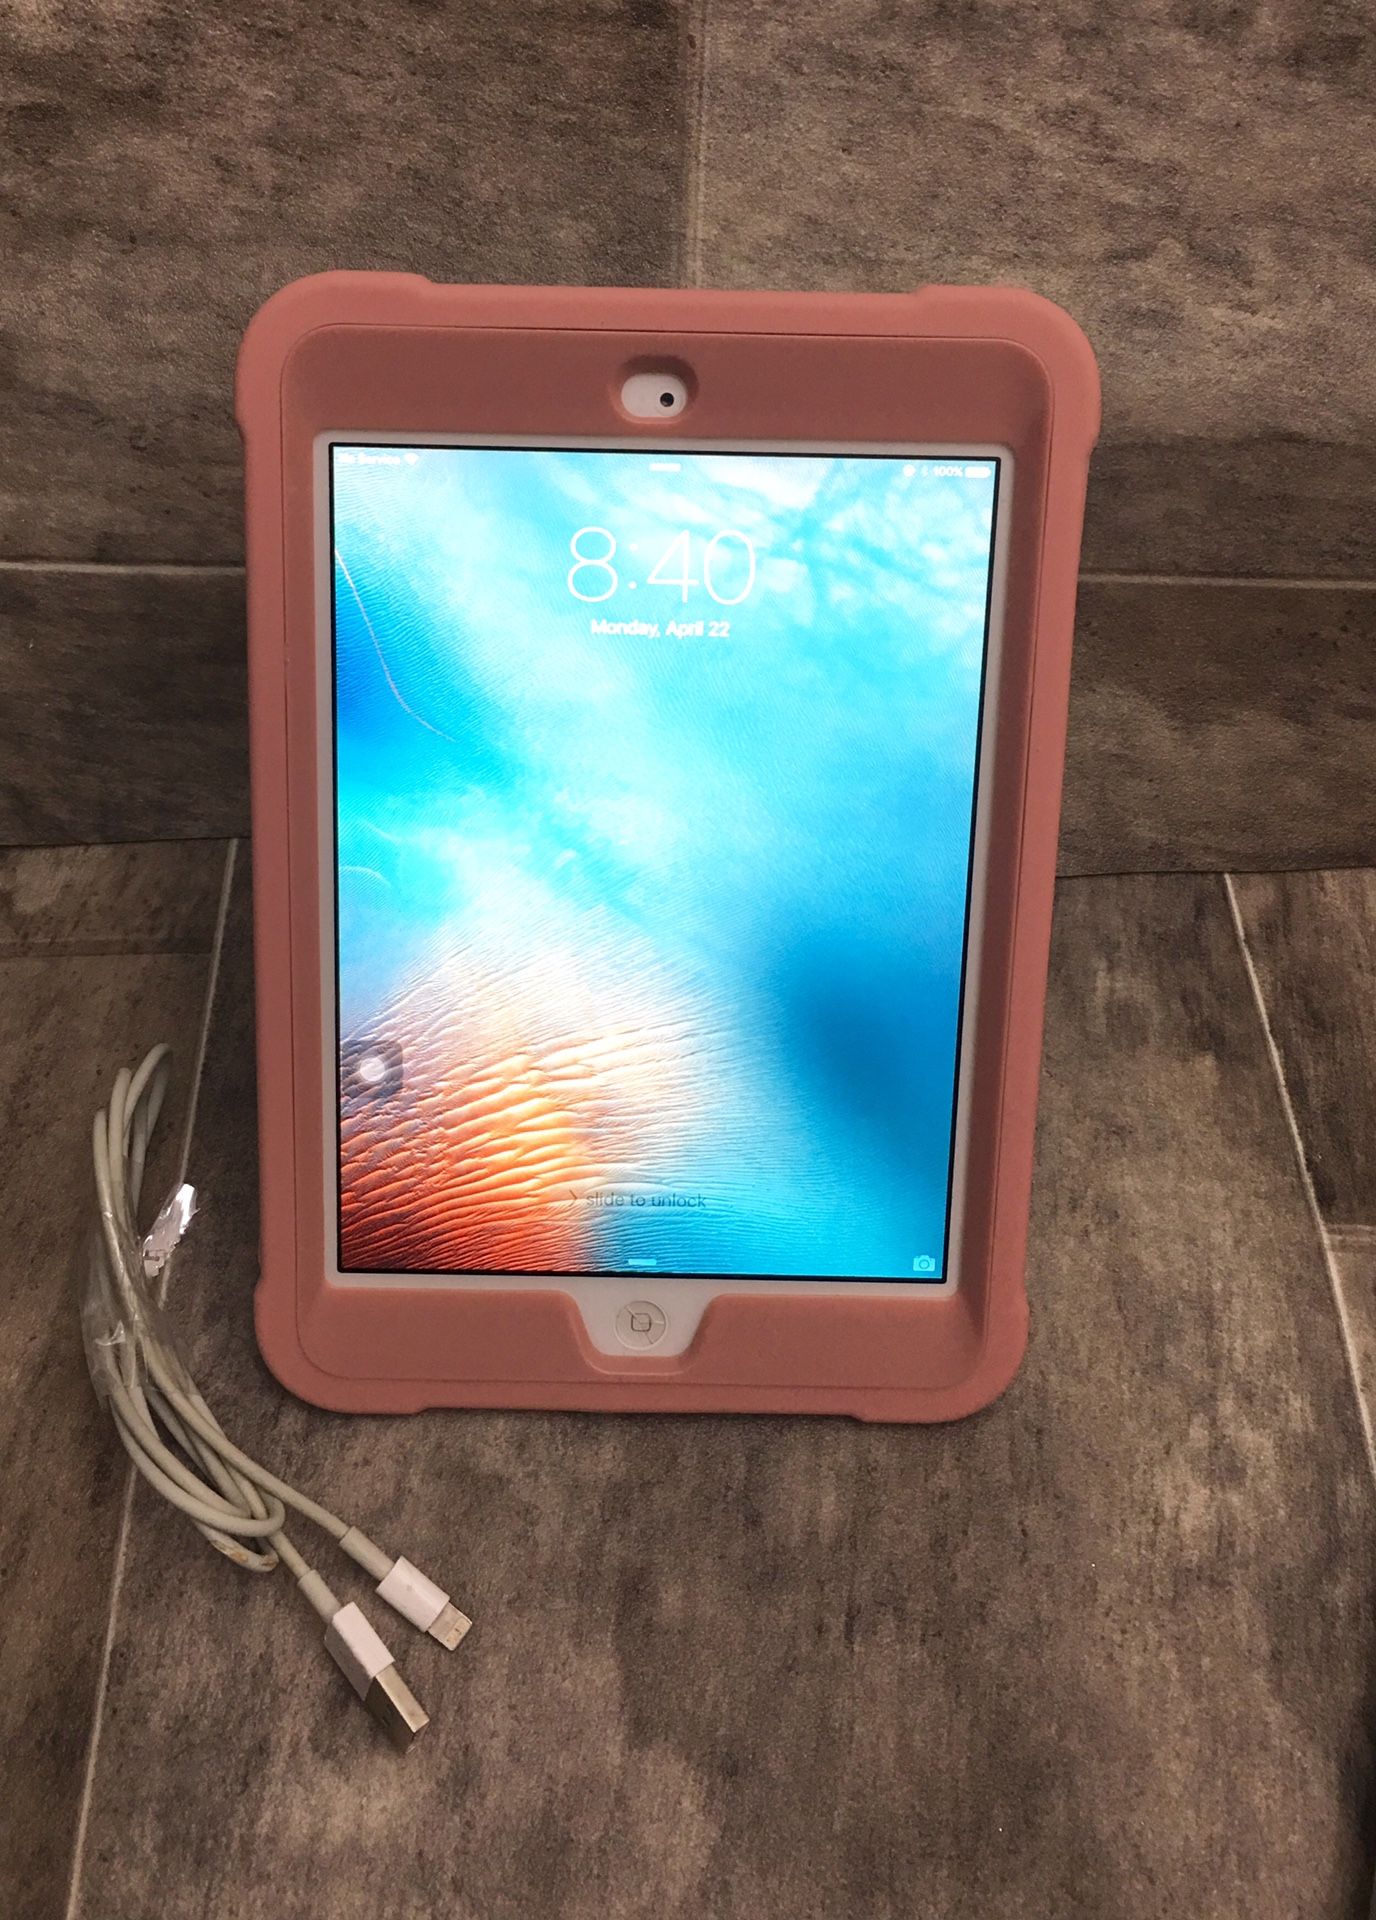 Apple iPad Mini 1 16GB WiFi & Cellular AT&T with Case